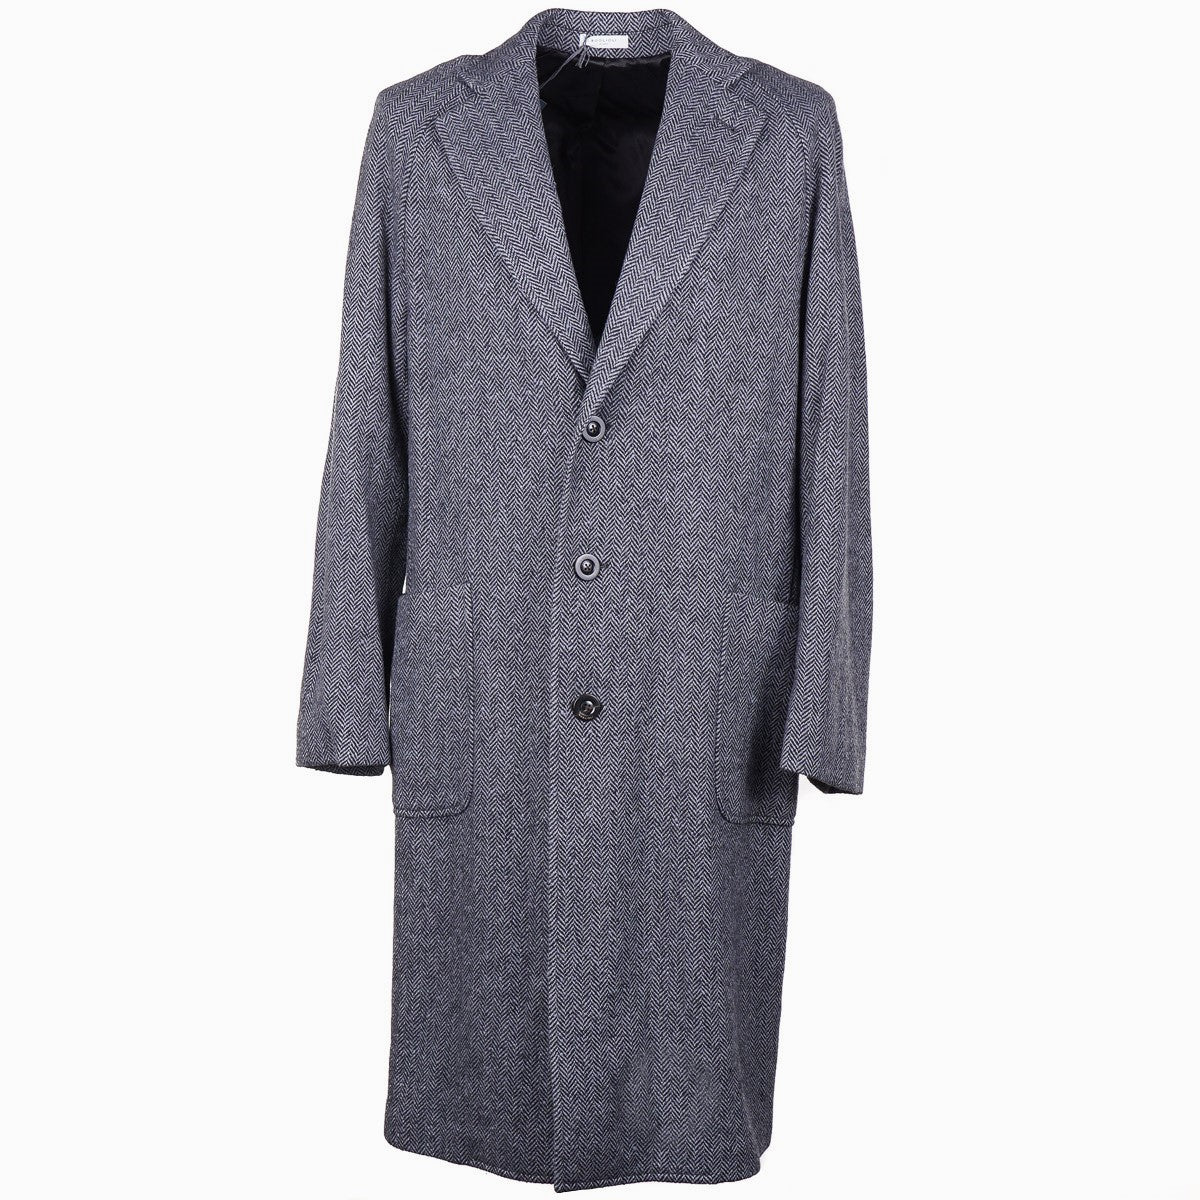 Boglioli Soft-Constructed Wool Overcoat - Top Shelf Apparel